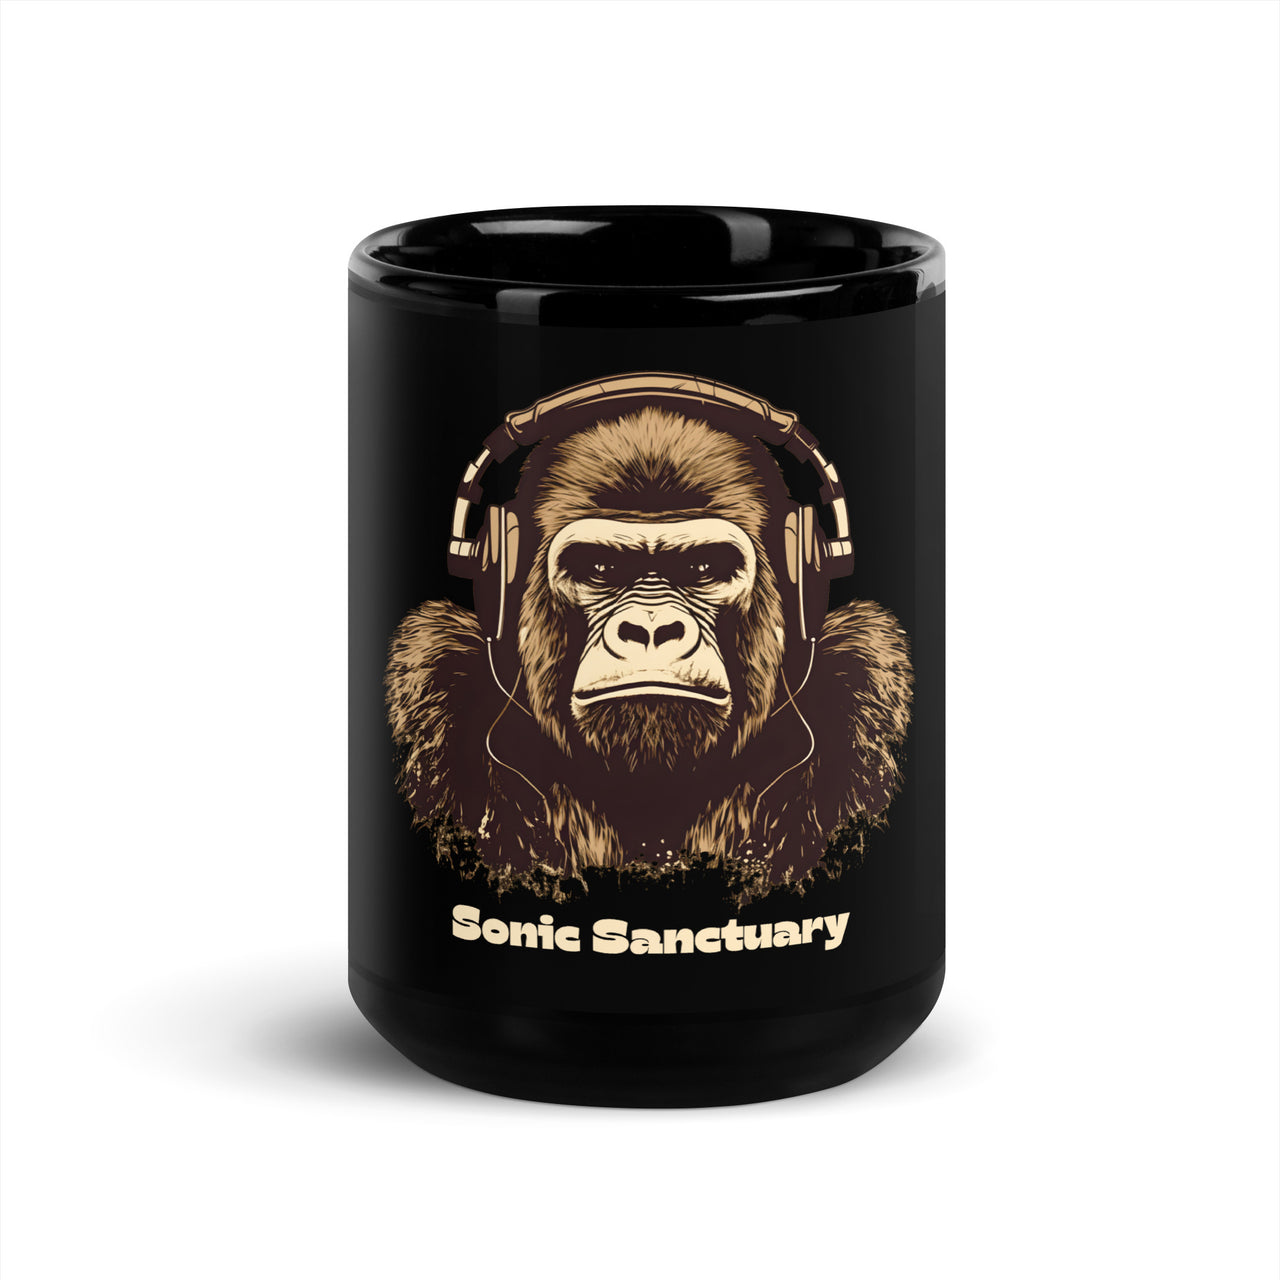 Sonic Sanctuary: Musical Gorilla Black Mug